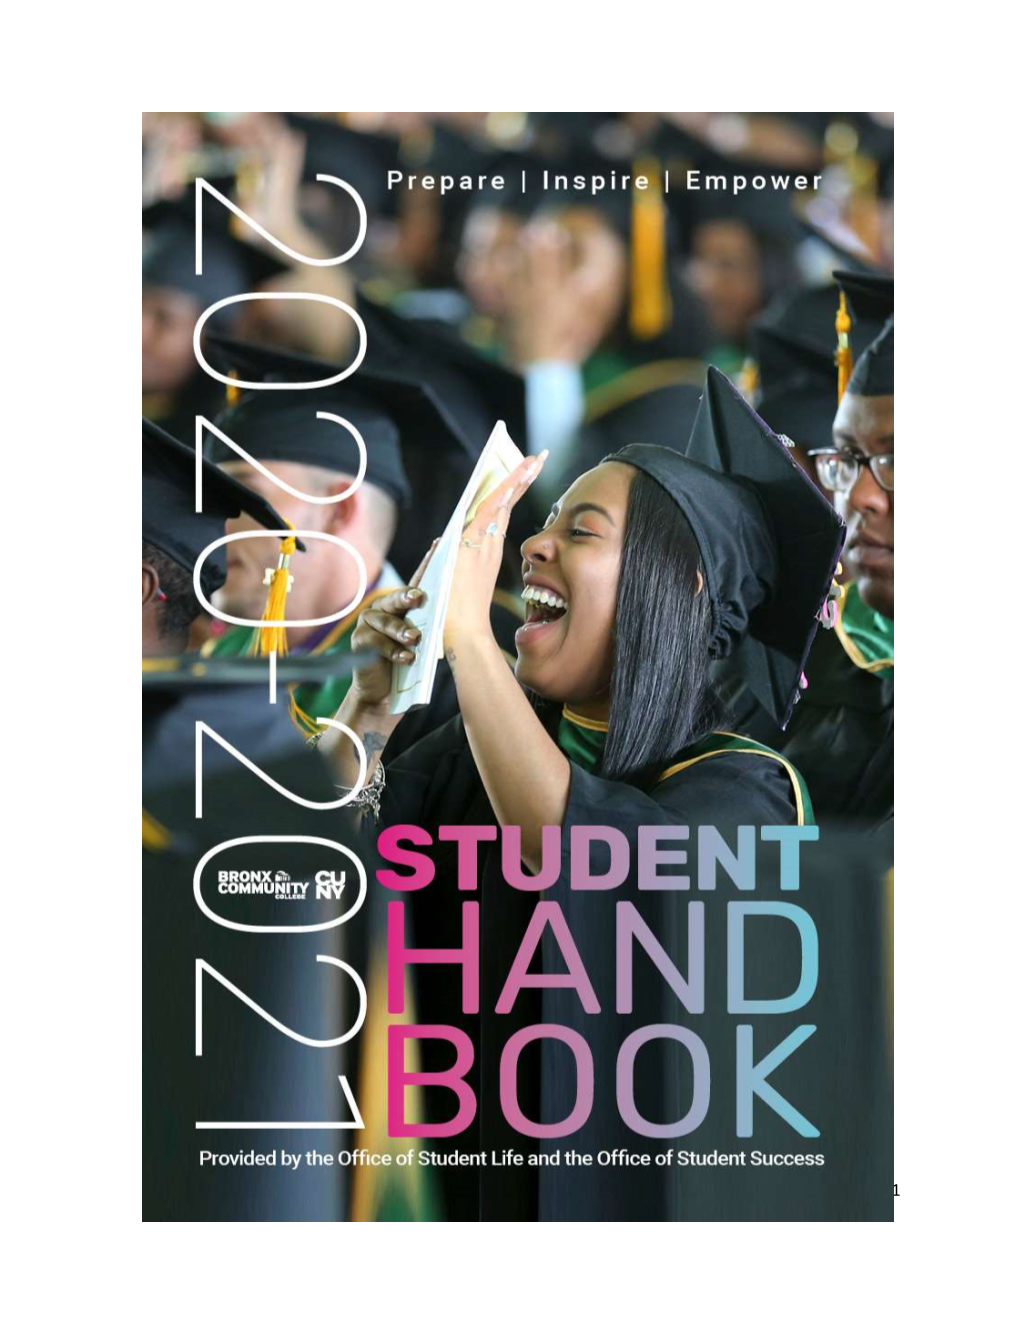 Access the 2020-2021 Student Handbook Here